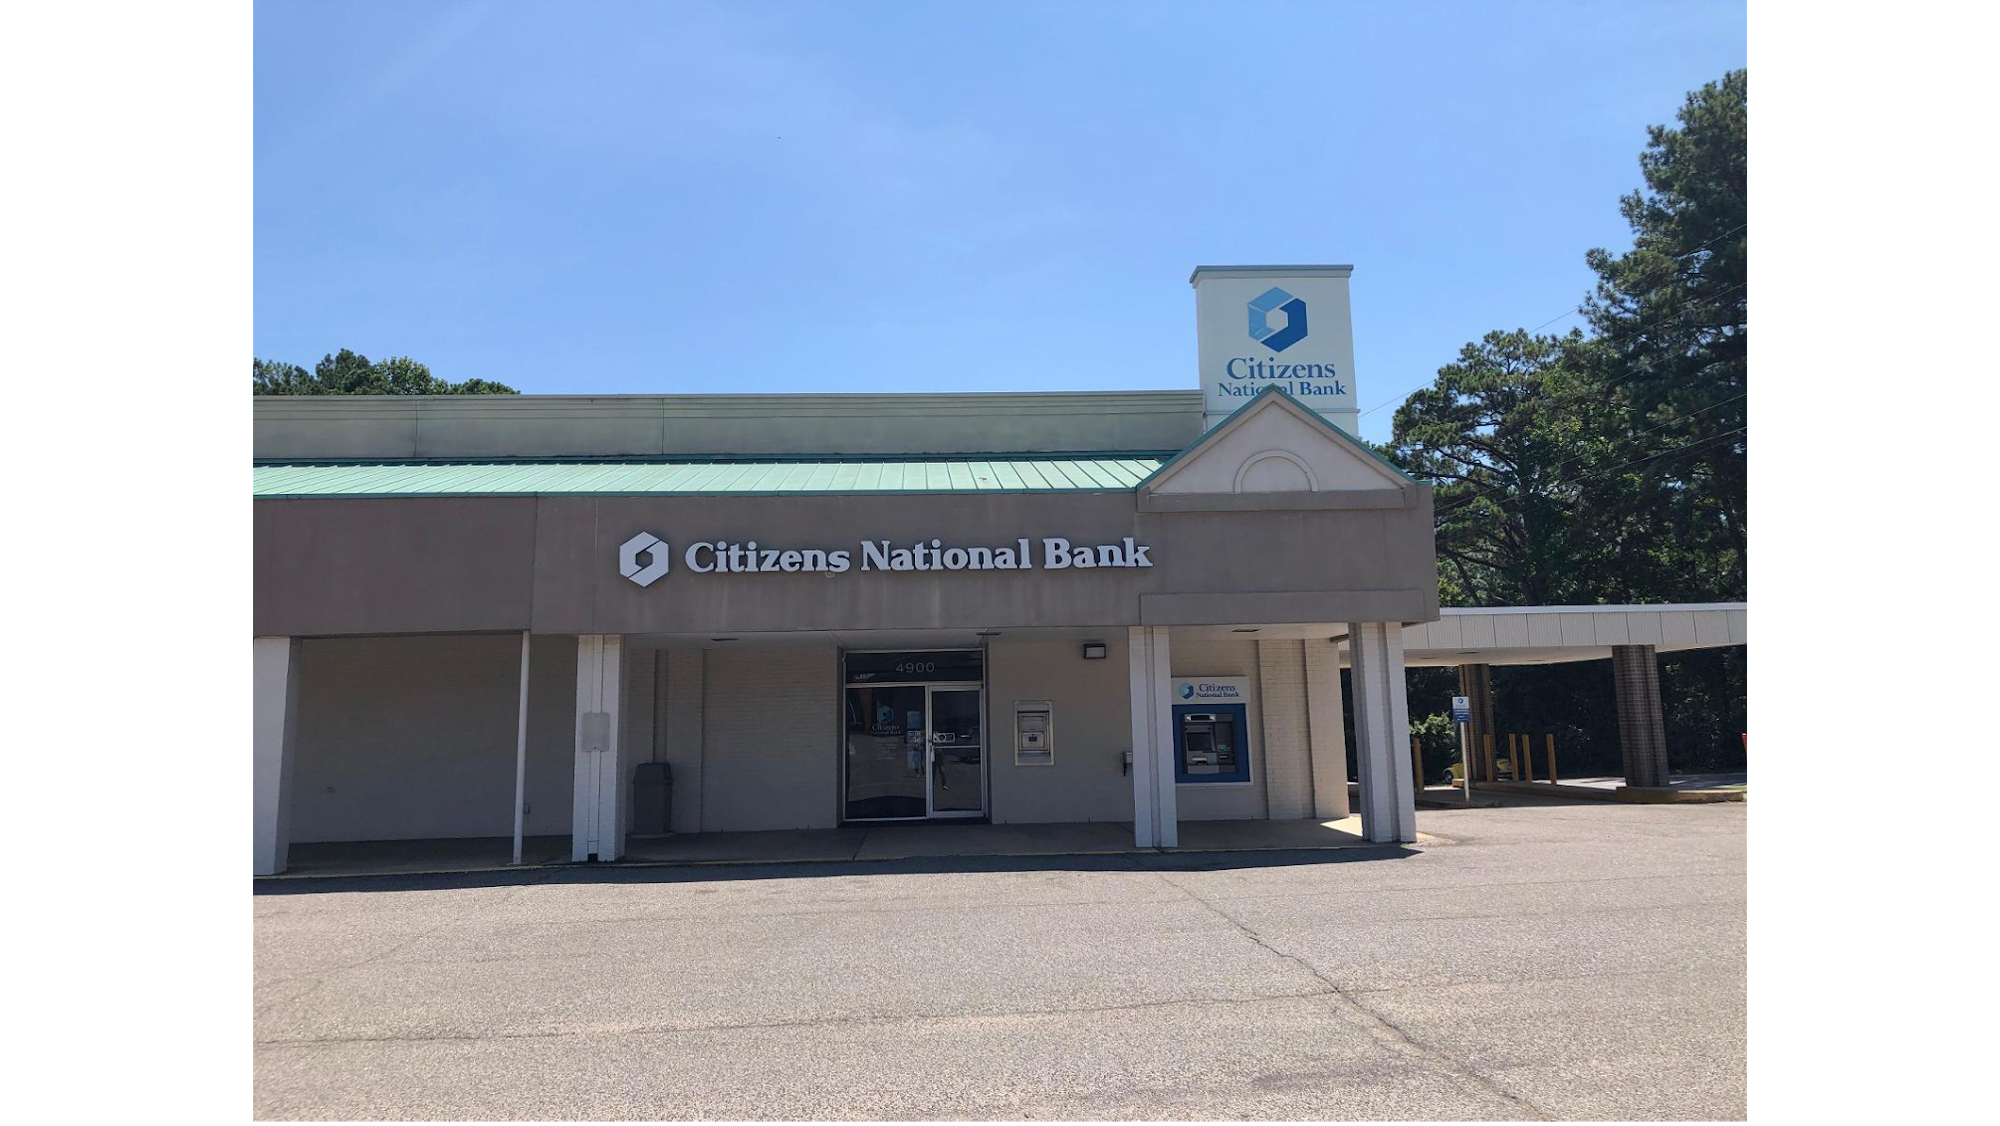 Citizens National Bank - Broadmoor Express Bank